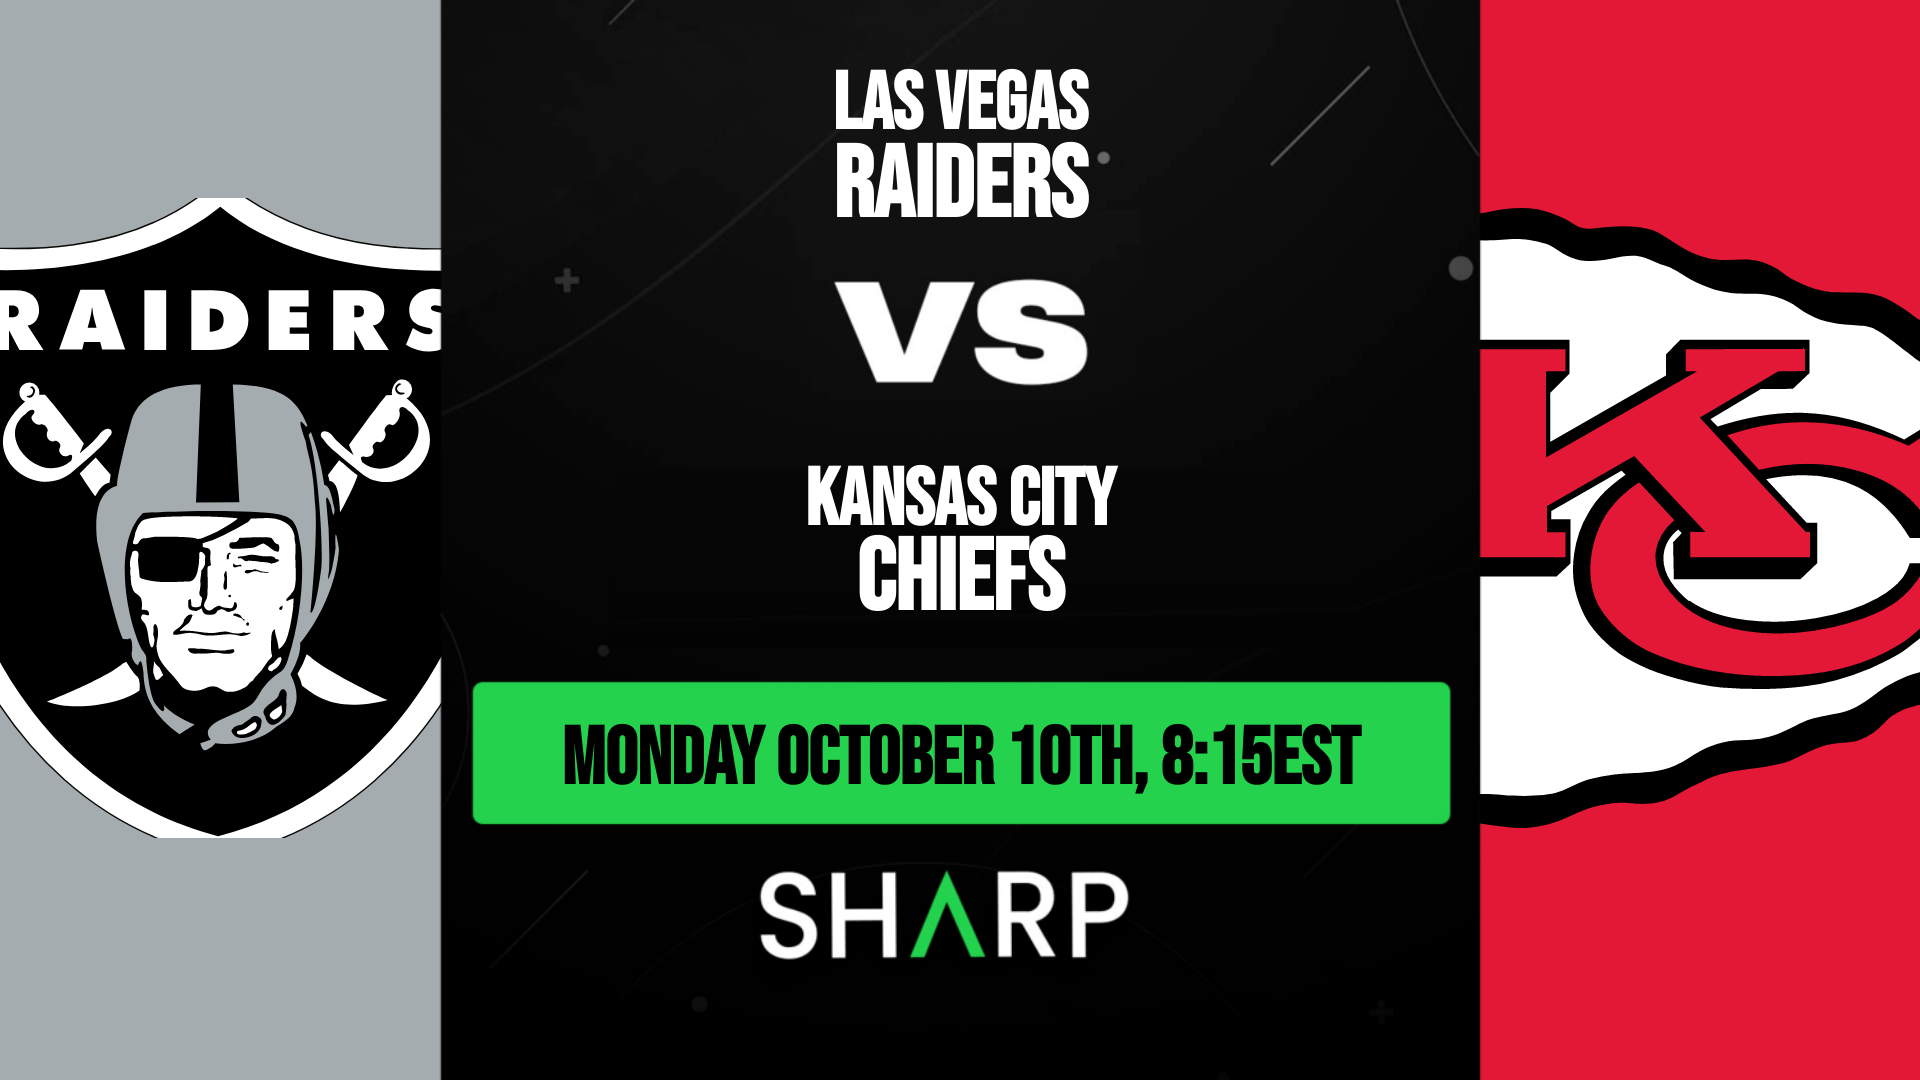 Las Vegas Raiders vs Kansas City Chiefs Matchup Preview - October 10th, 2022